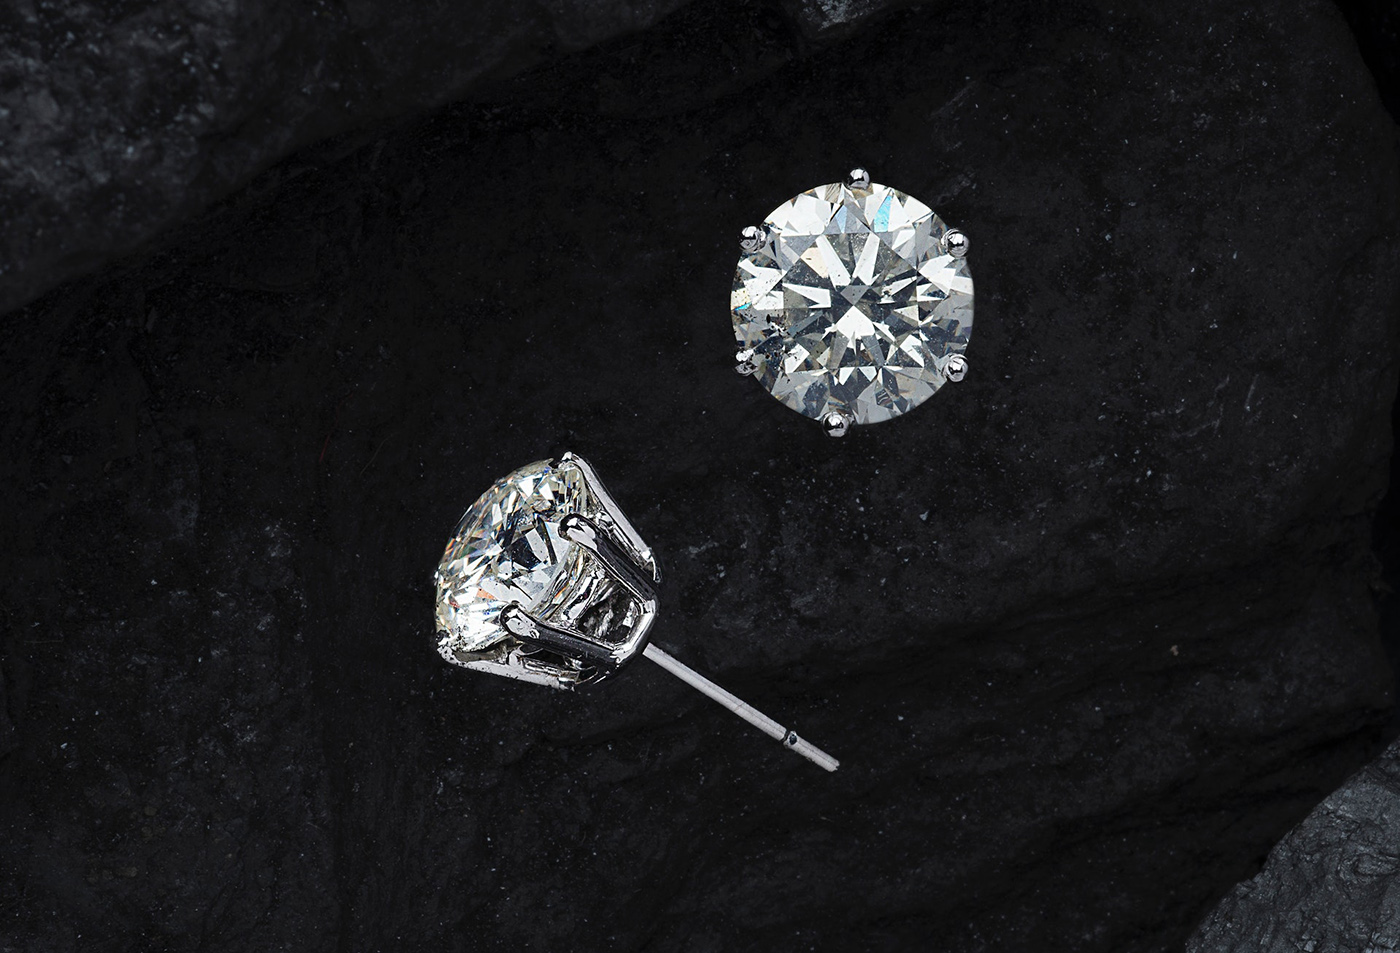 Diamond earrings on a black background.